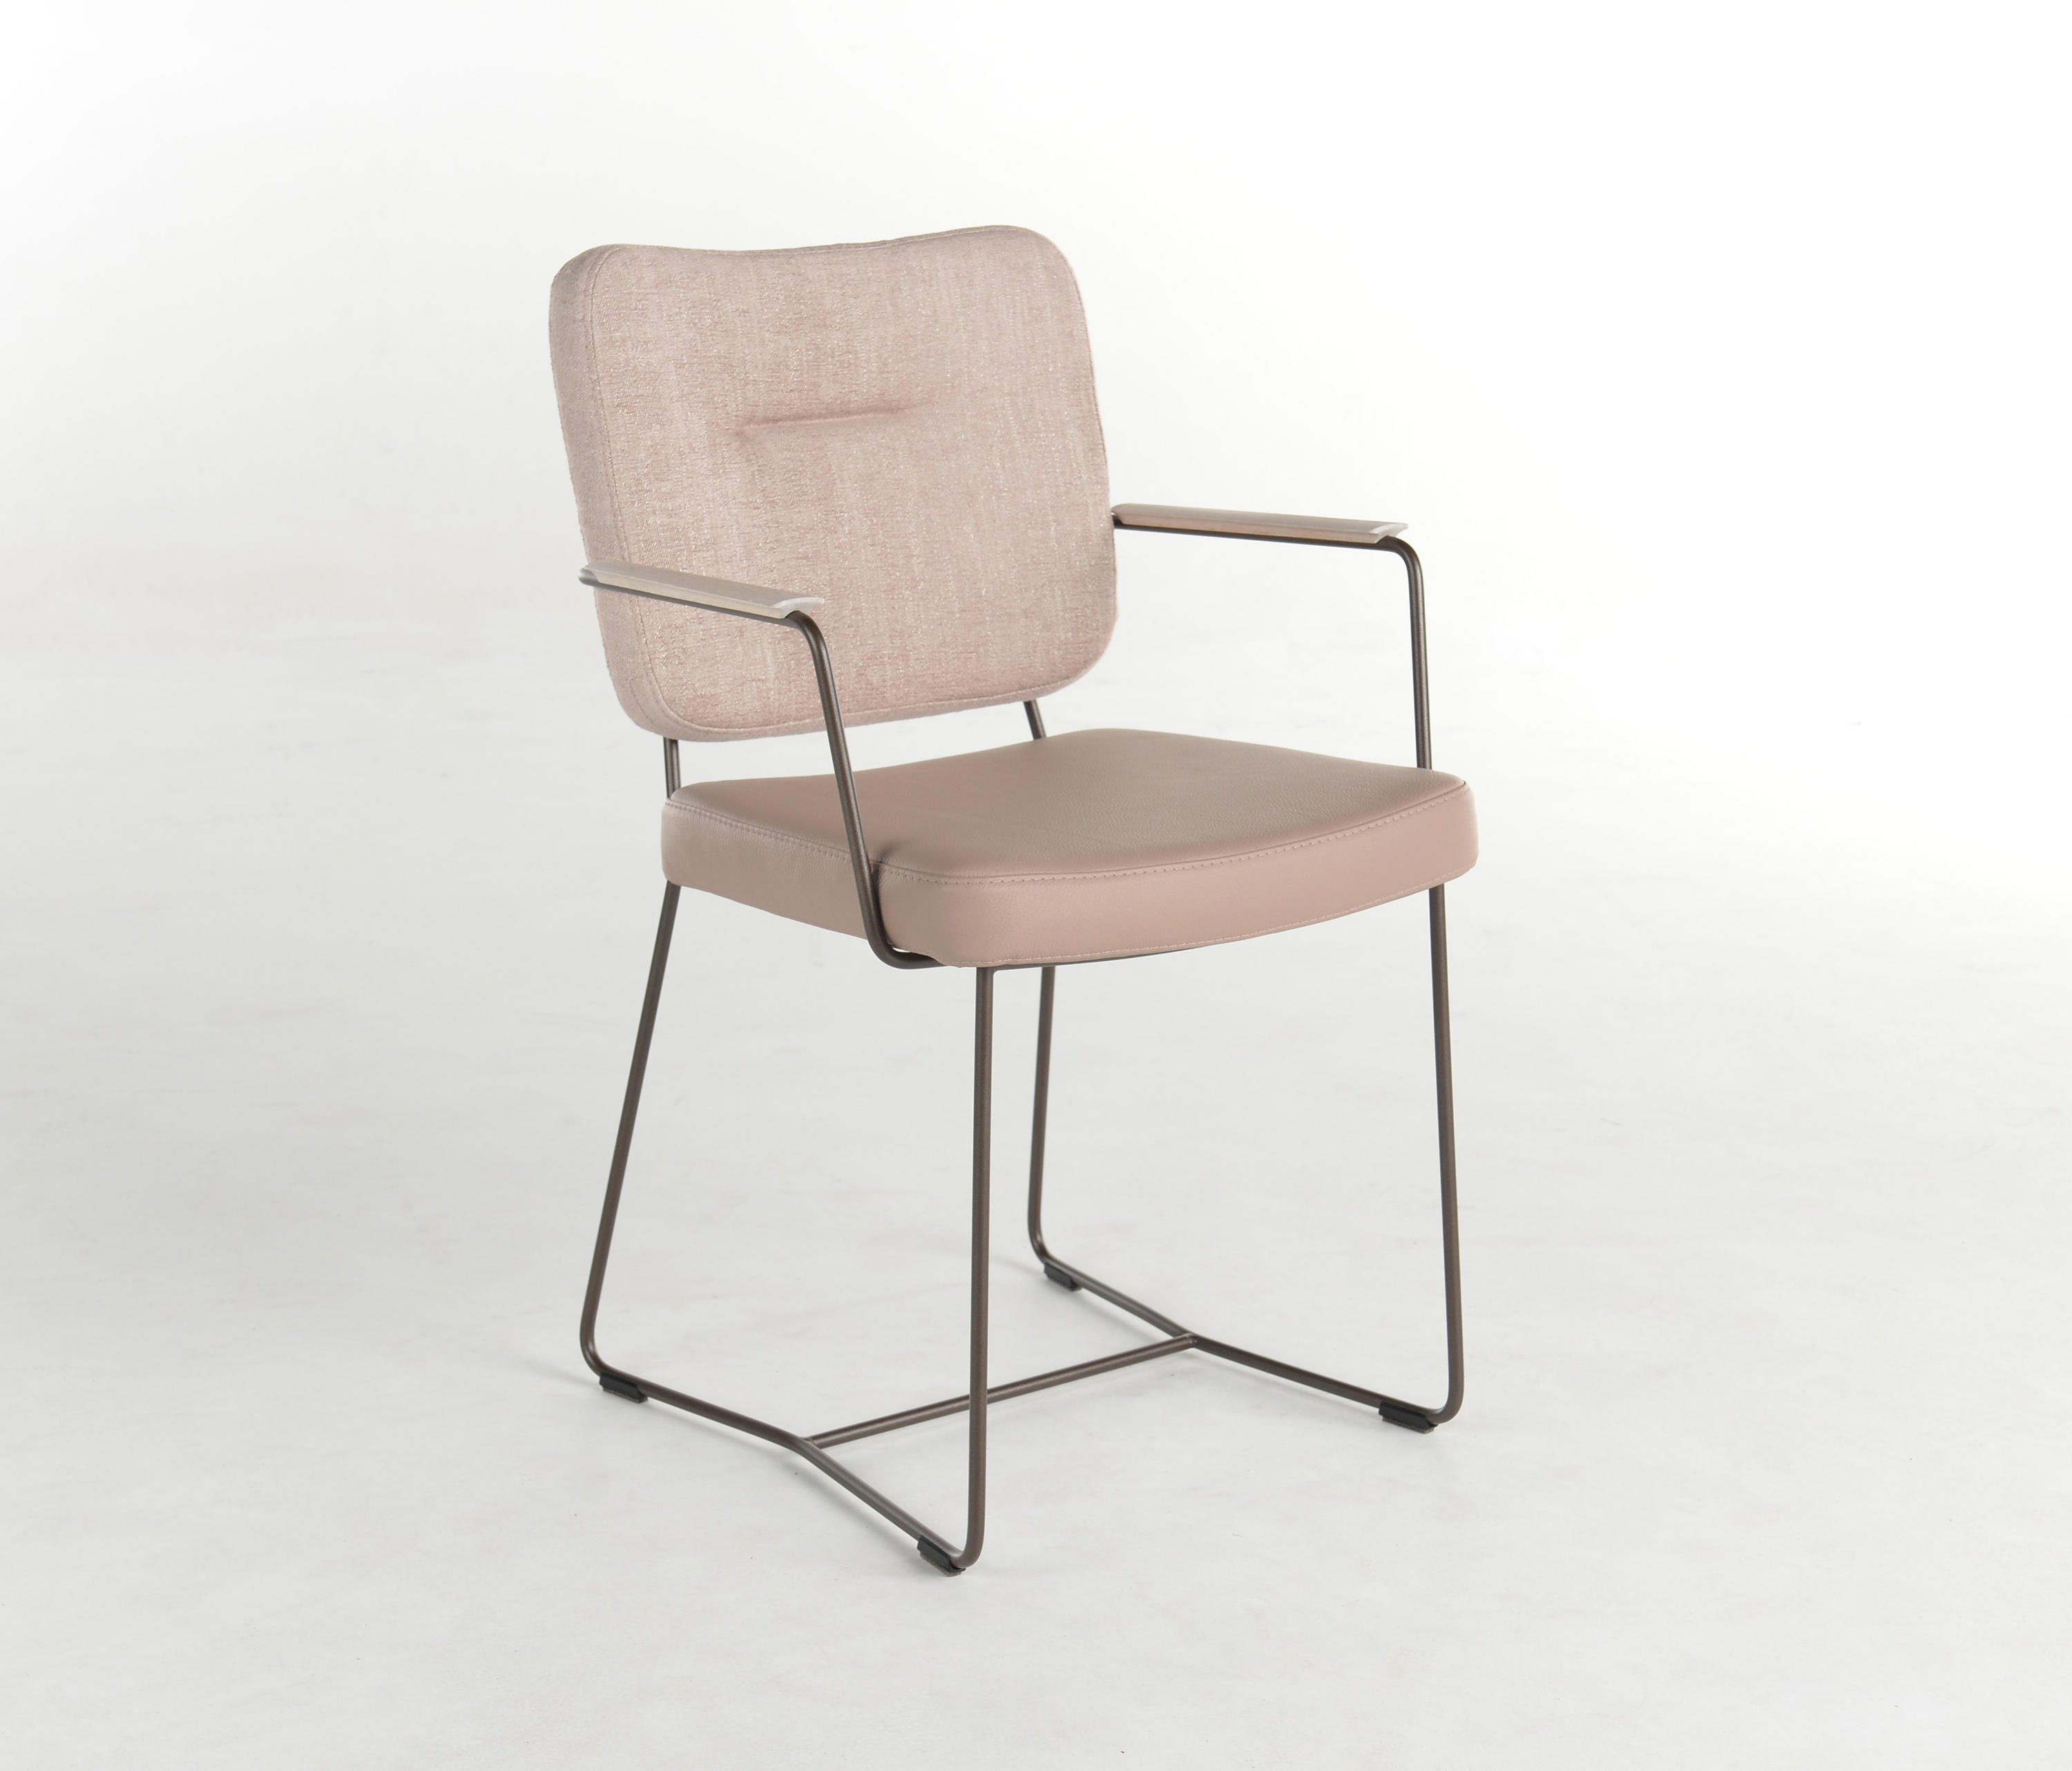 Draak donderdag niezen KIKO PLUS - Chairs from Bert Plantagie | Architonic